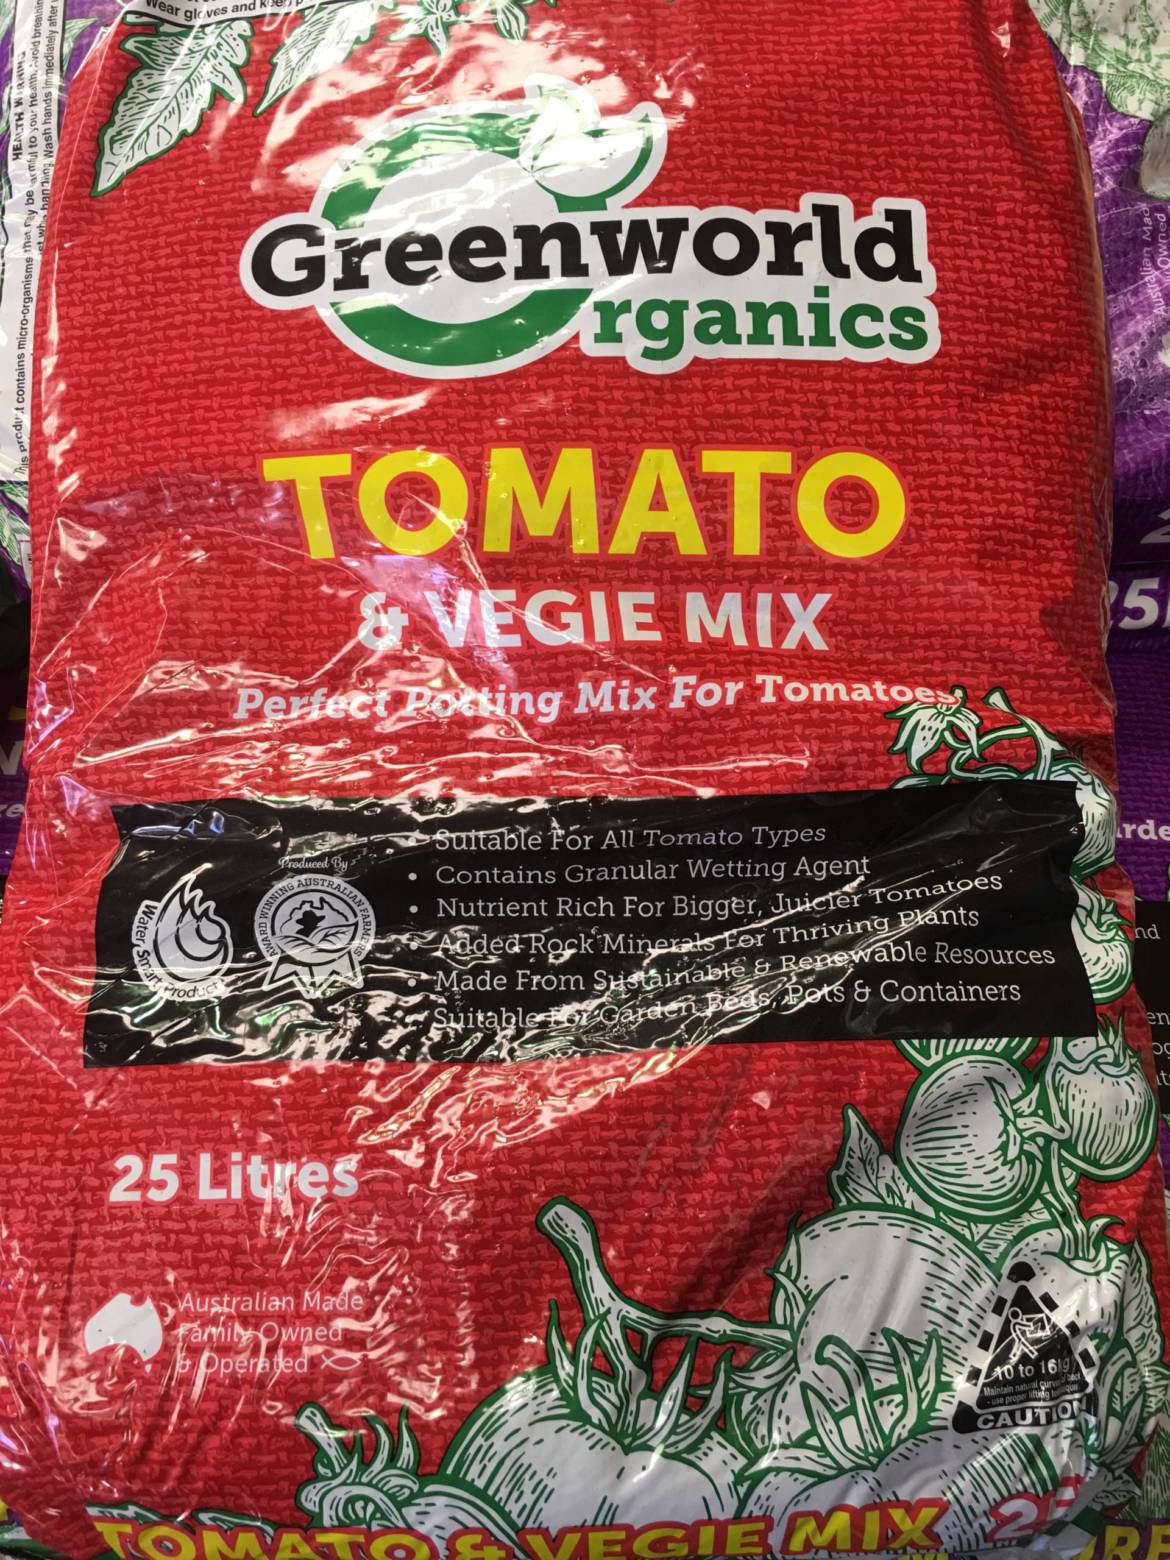 Greenworld-organics-tomato-and-vegie-mix-scaled.jpg